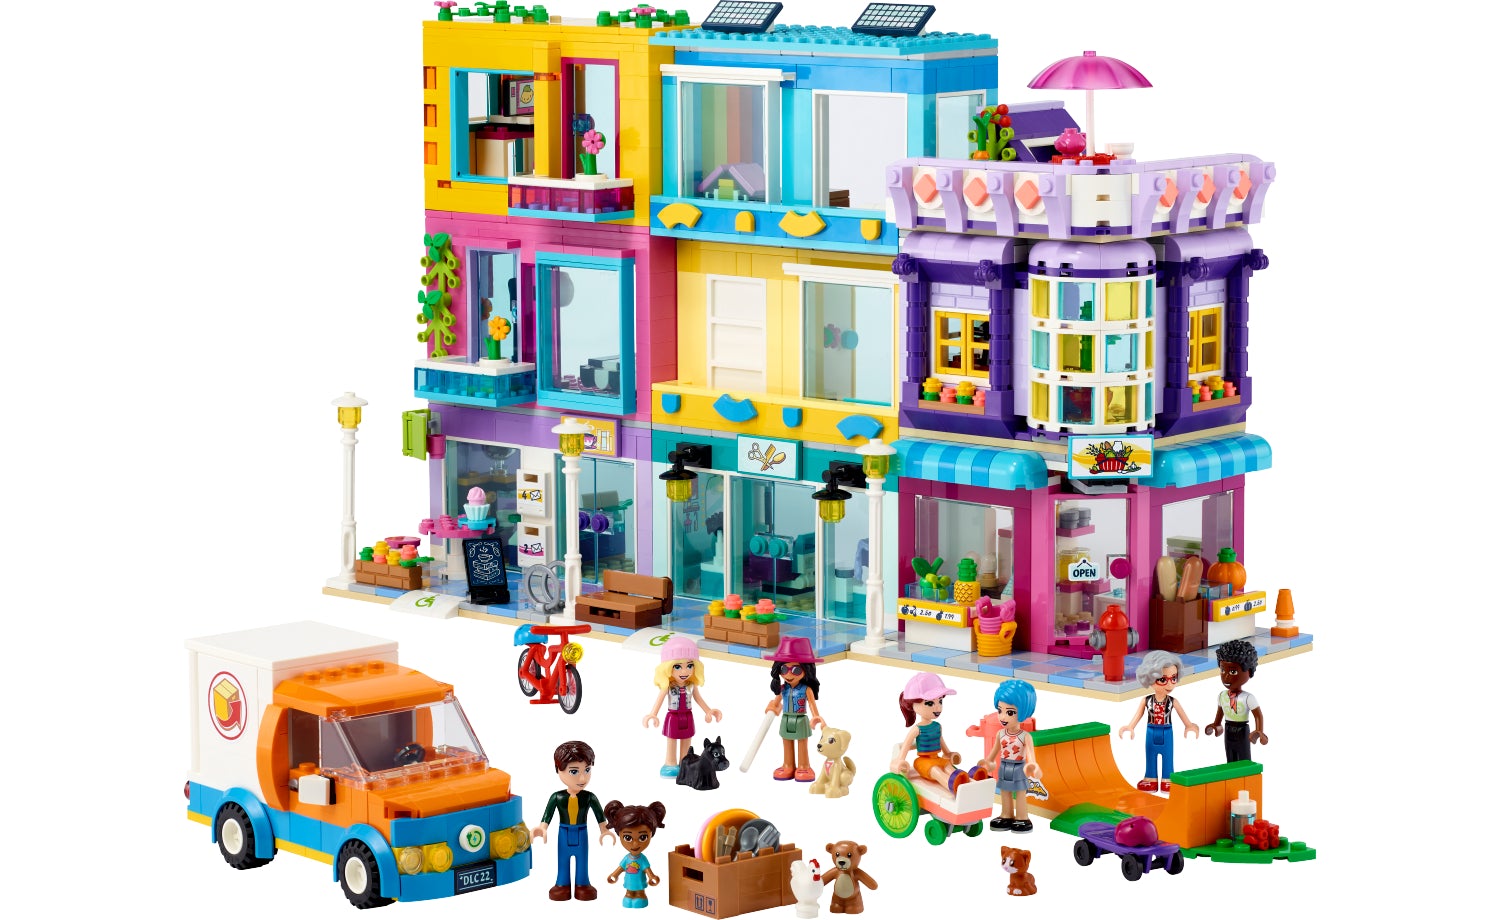 LEGO® Friends Main Street Building 41704